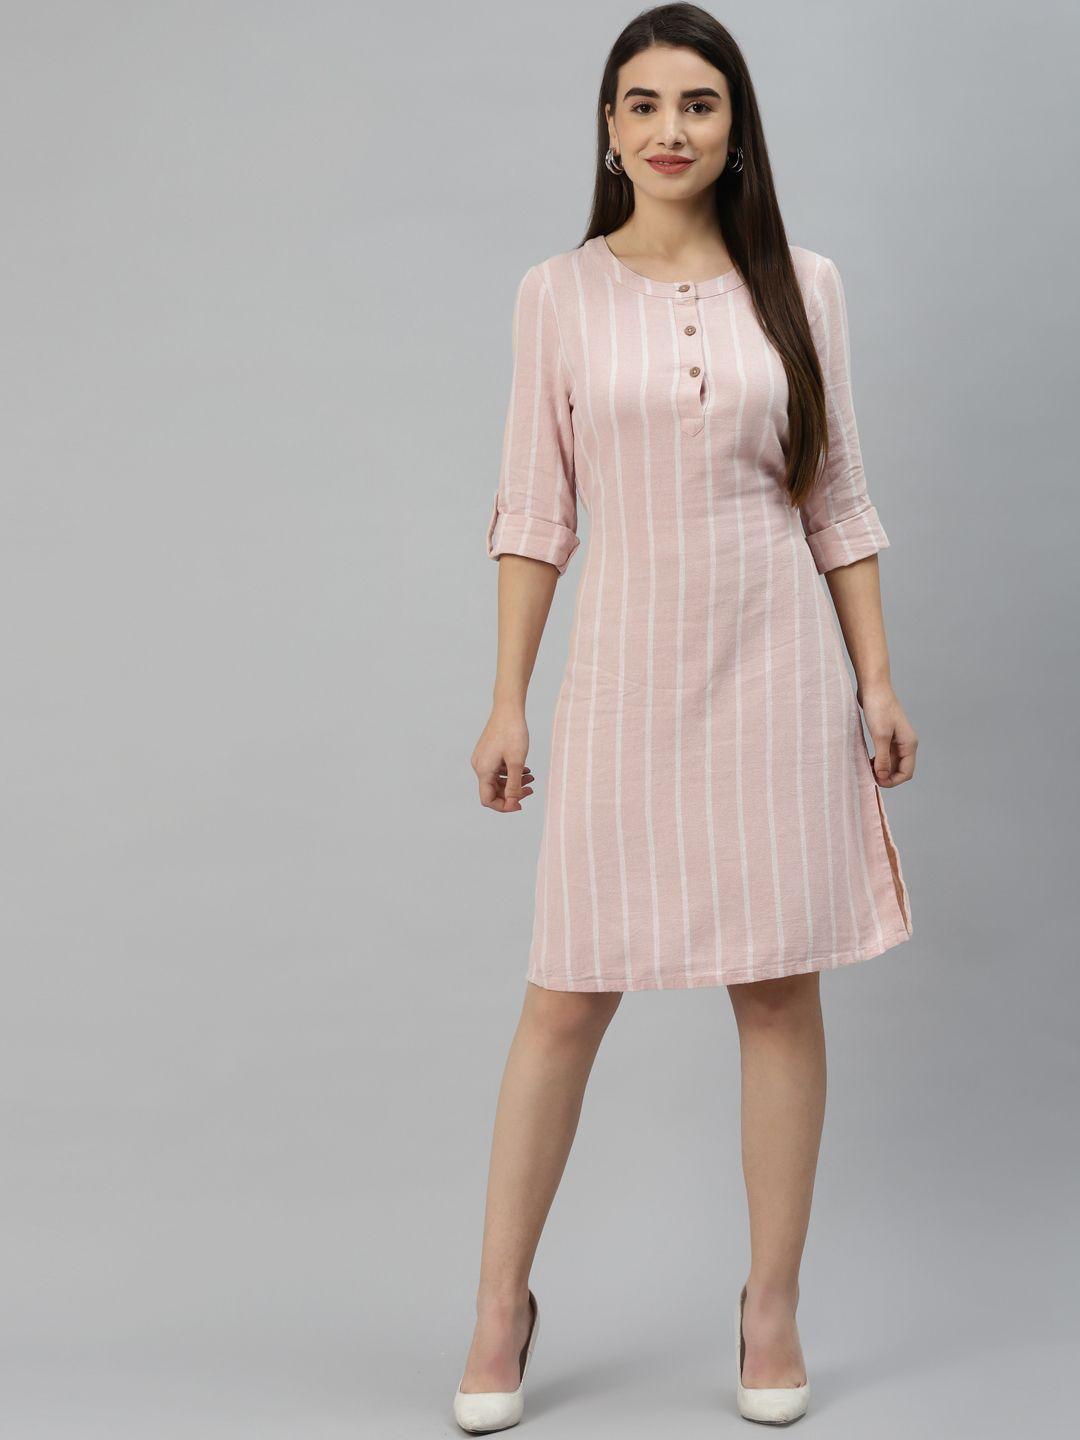 marks & spencer pink & off-white striped a-line dress